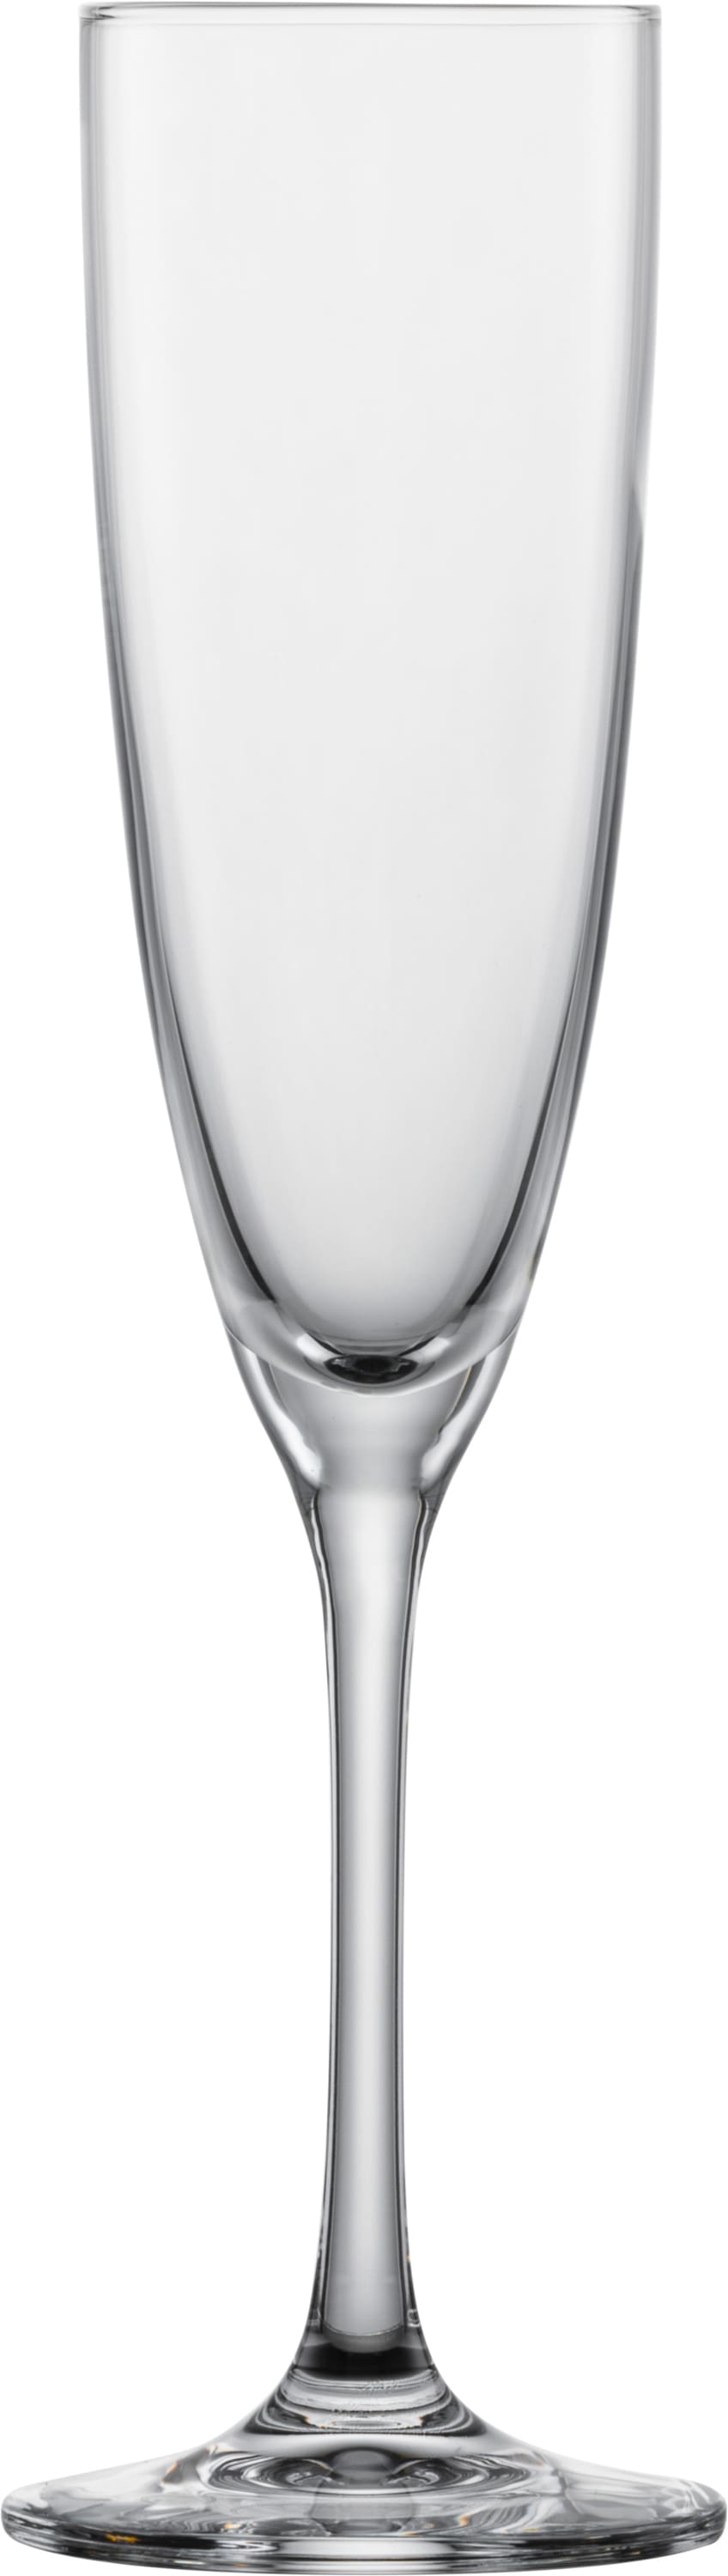 SCHOTT ZWIESEL Sekt-/ Champagnerglas CLASSICO 6er Set 210 ml